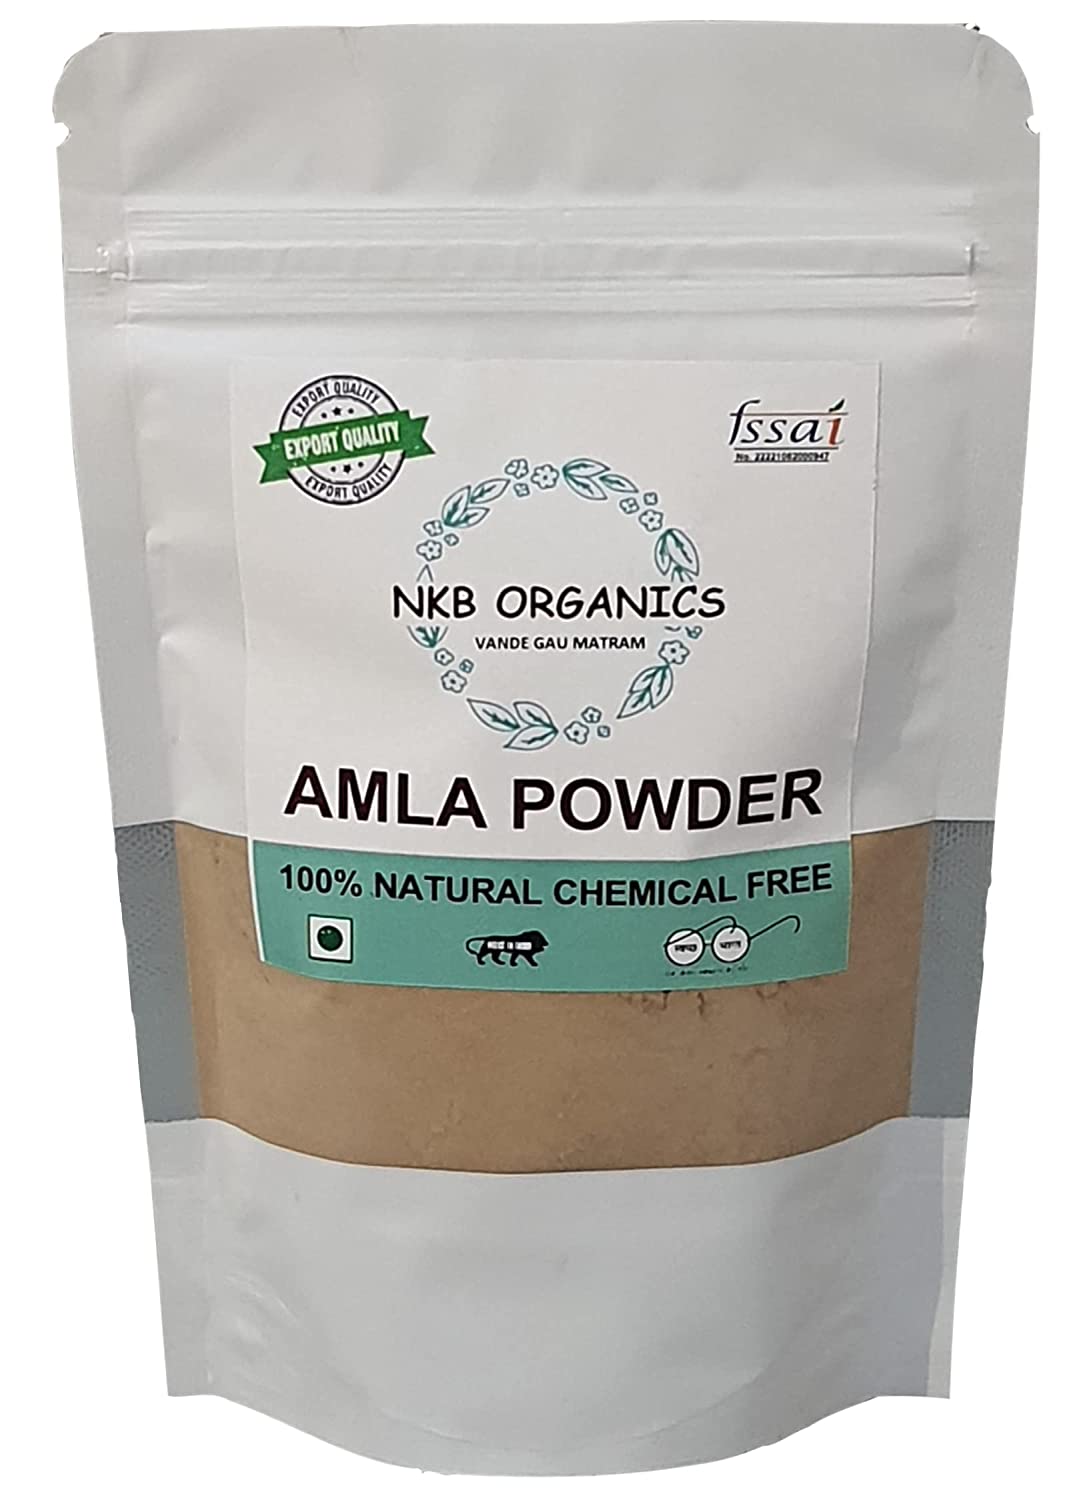 NKB Organics Amla Powder Image